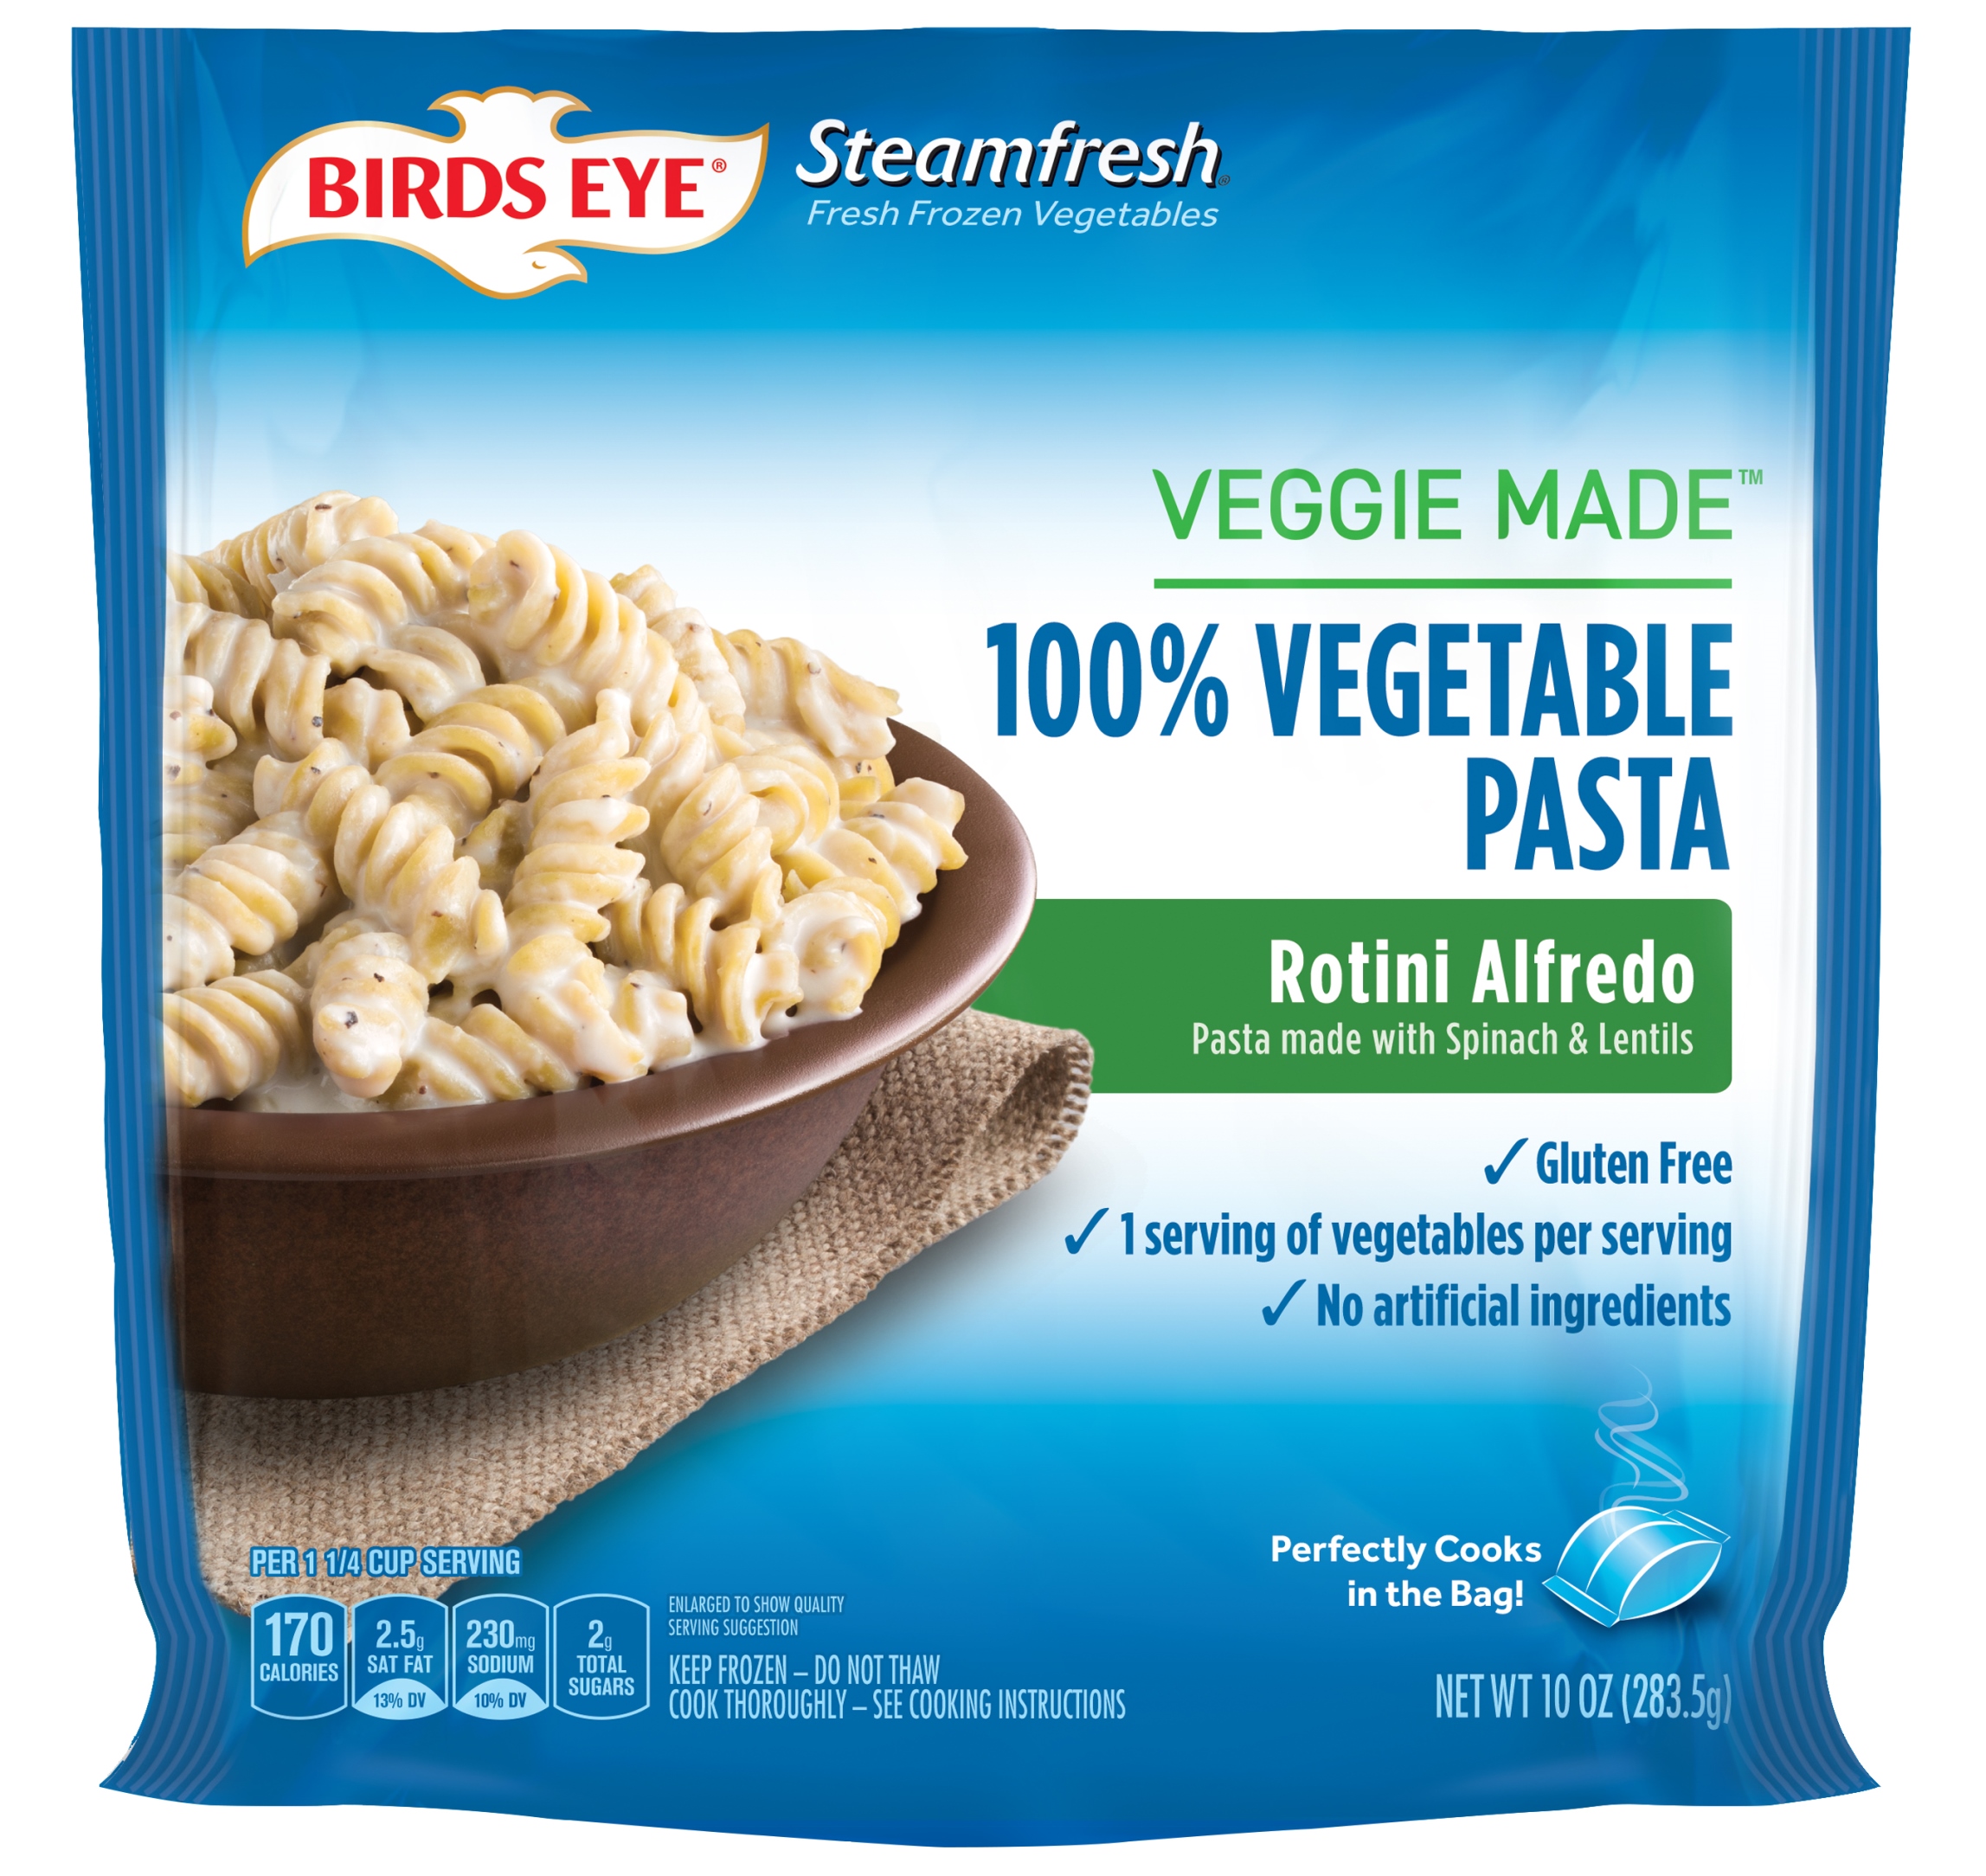 Birds Eye Veggie Made pasta, Pinnacle Foods